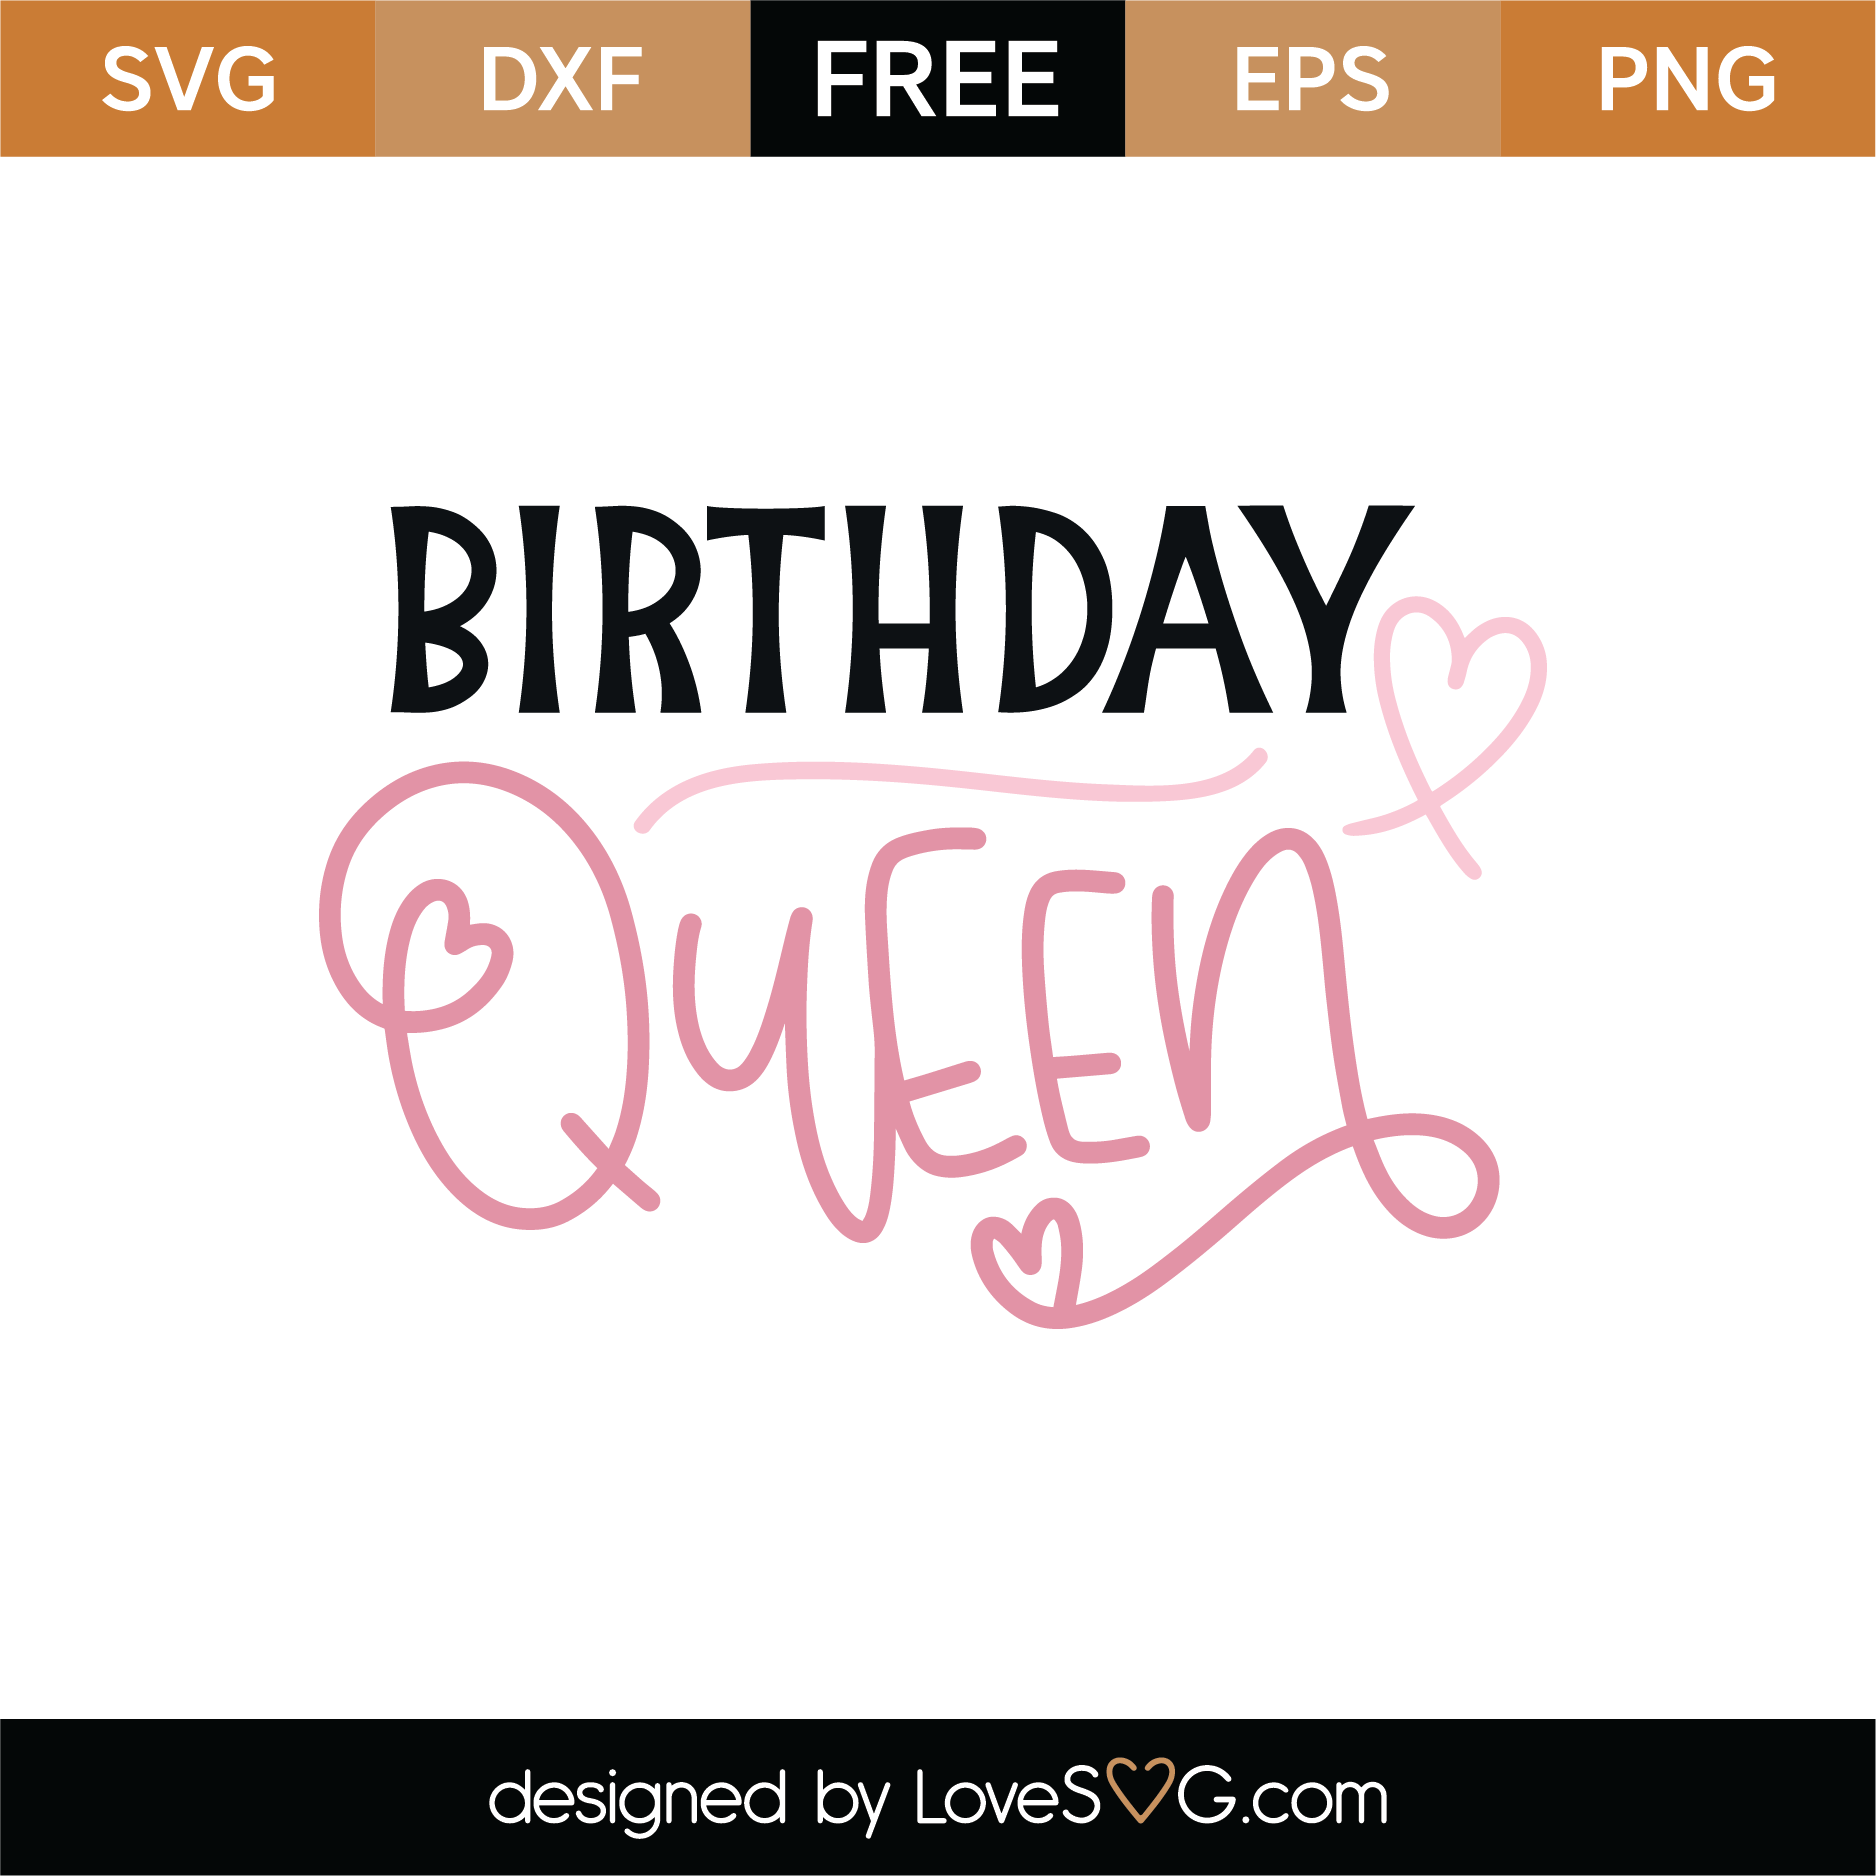 Download Free Birthday Queen SVG Cut File | Lovesvg.com